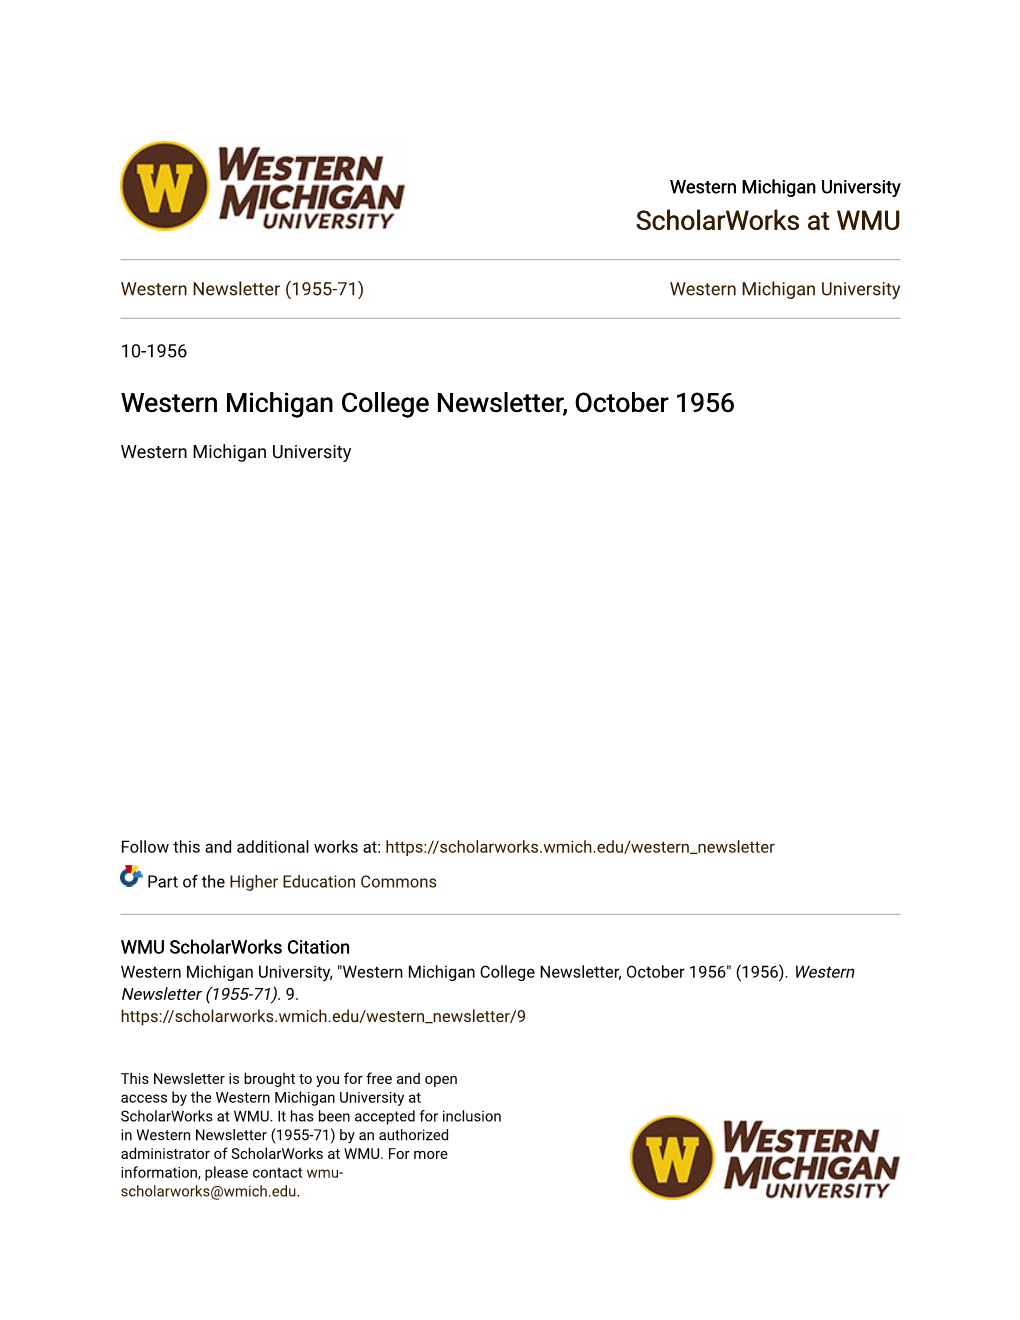 Western Michigan College Newsletter, October 1956